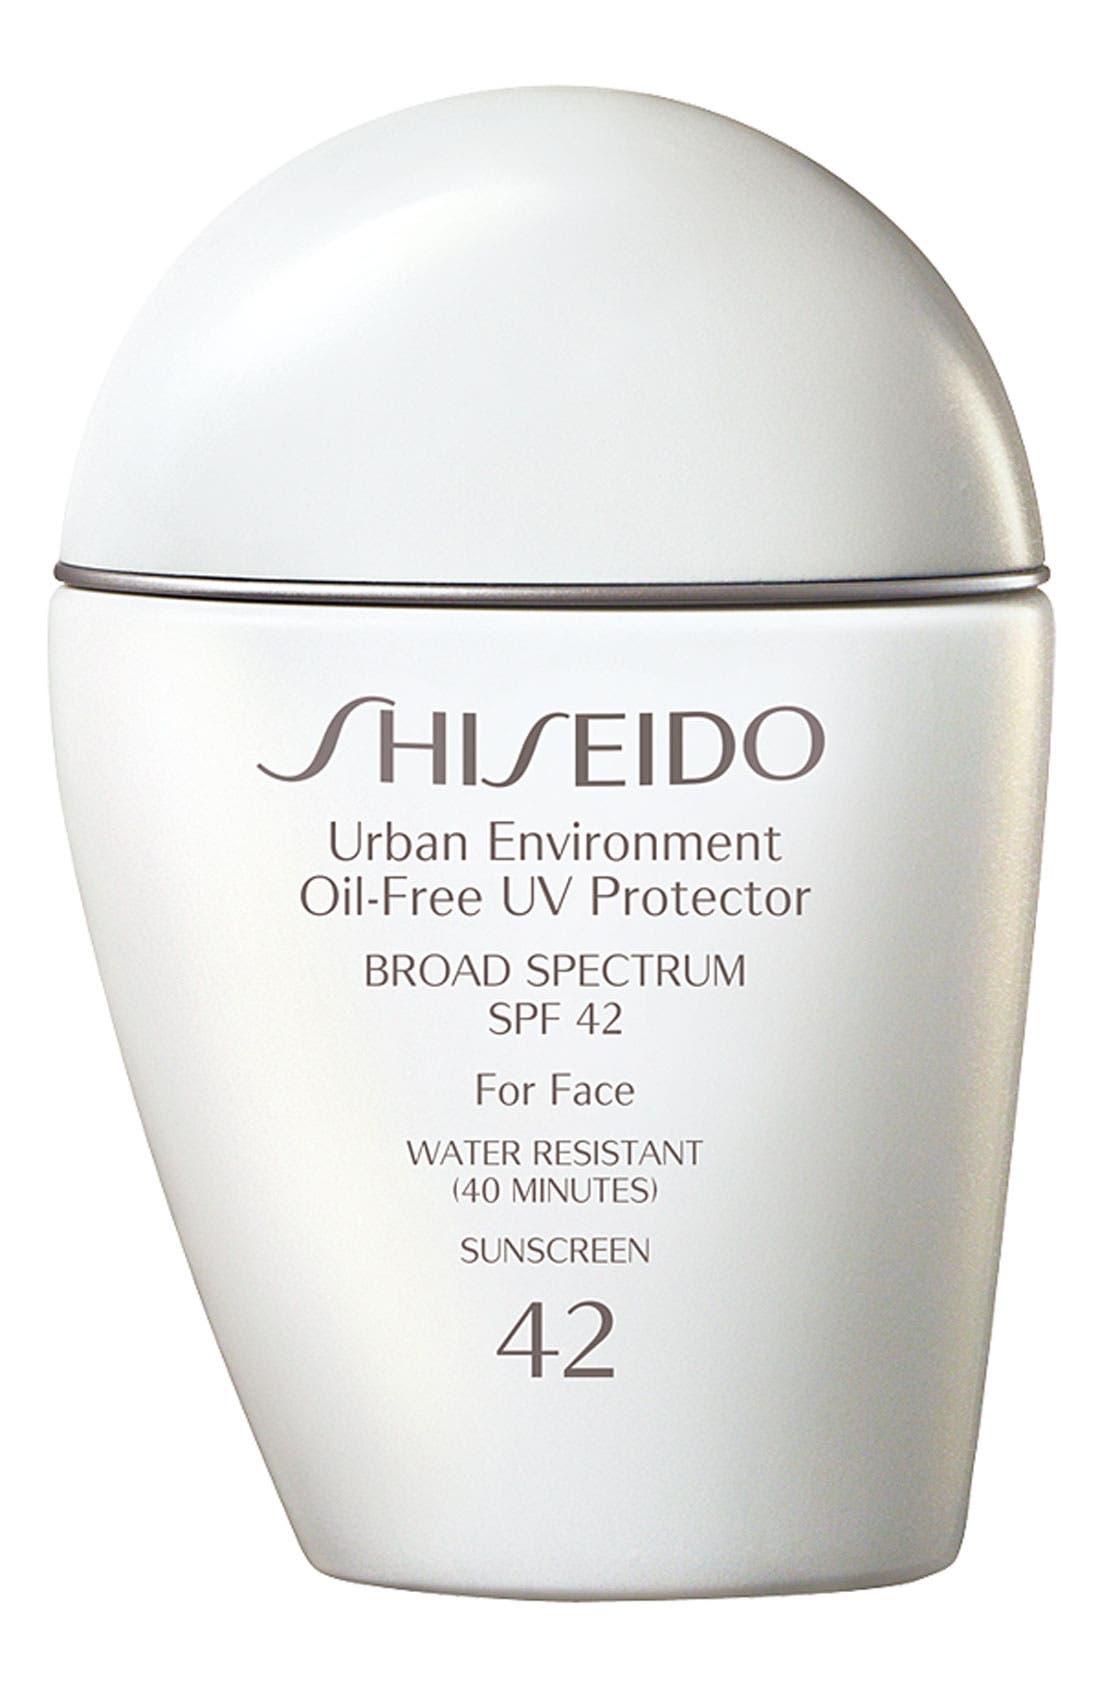 SHISEIDO Urban Environment Oil-Free UV Protector Broad Spectrum Sunscreen SPF 42